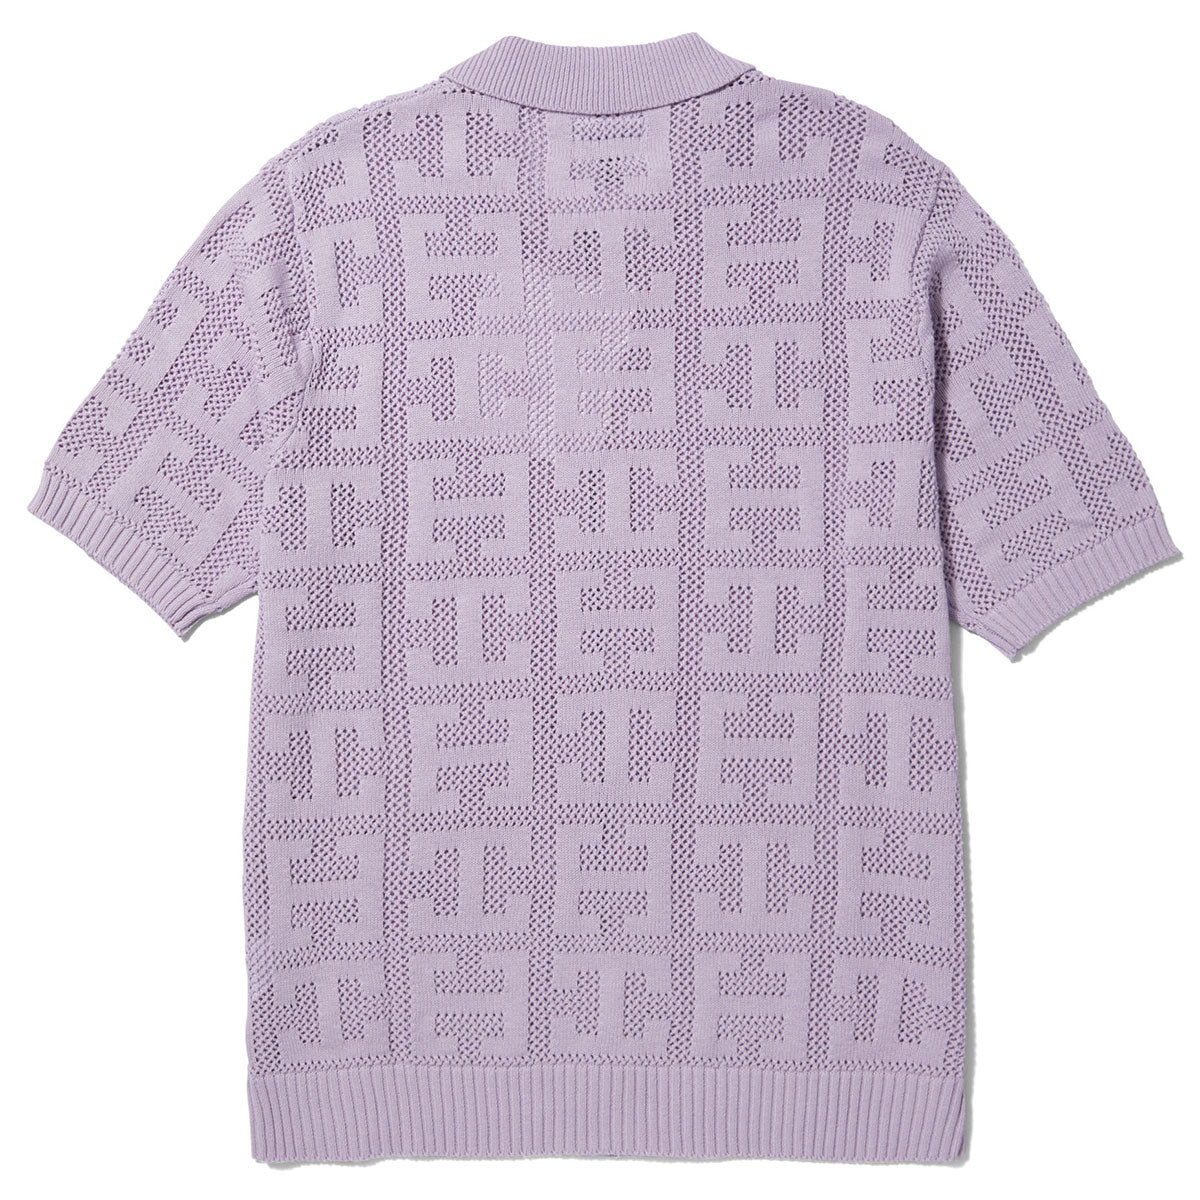 HUF Monogram Jacquard Zip Sweater - Lavender image 2